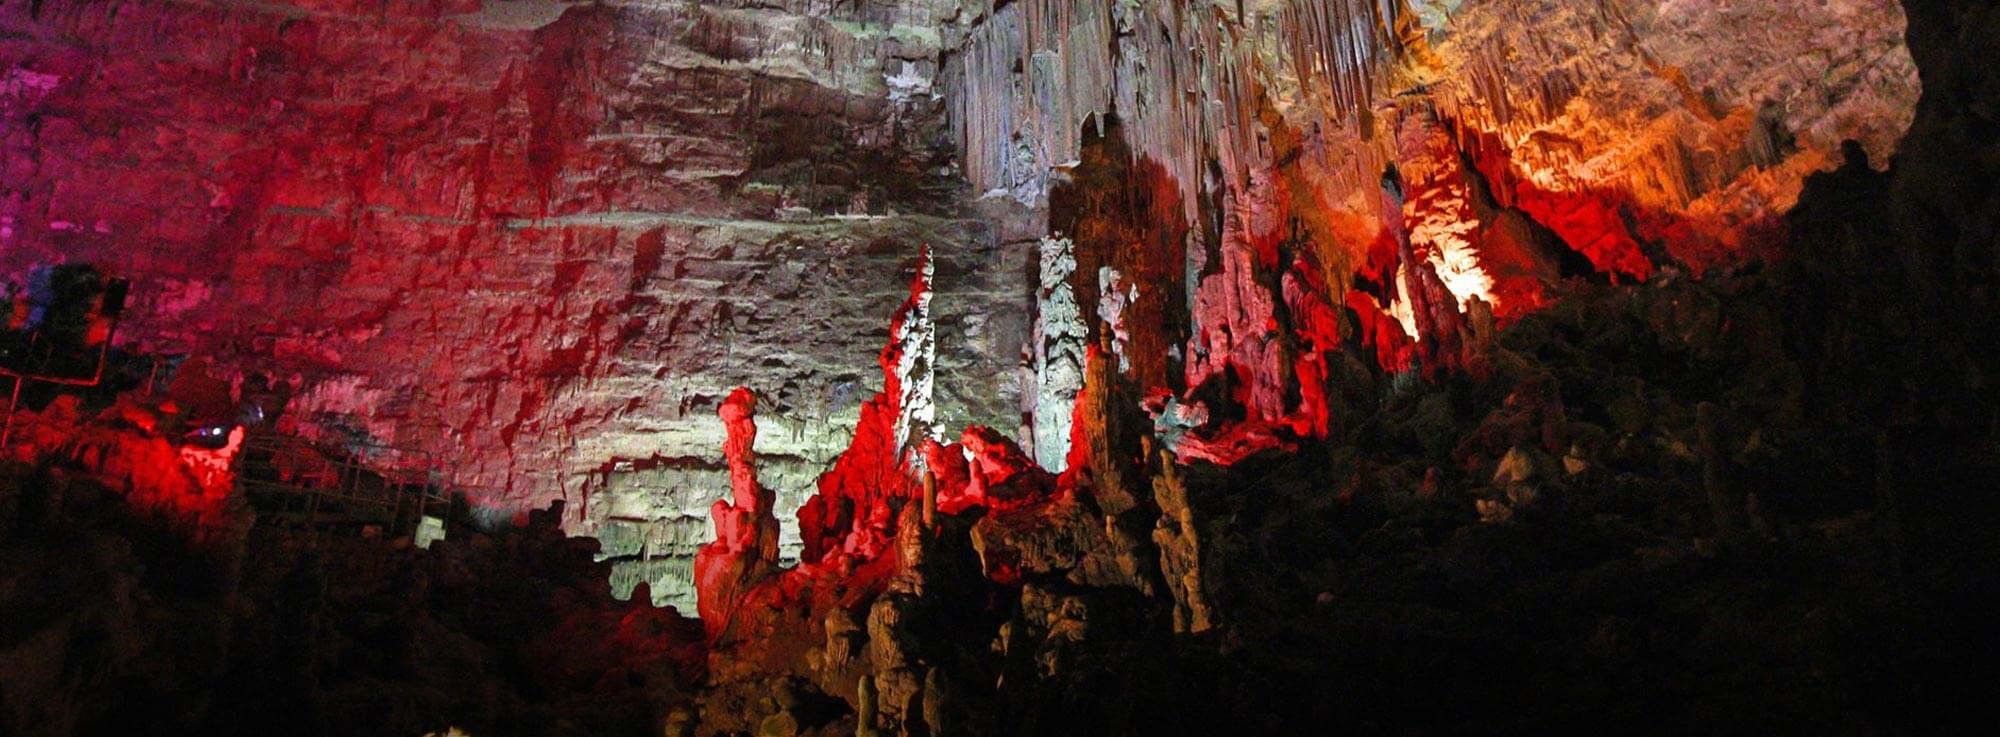 Castellana Grotte: Meraviglia di Luci